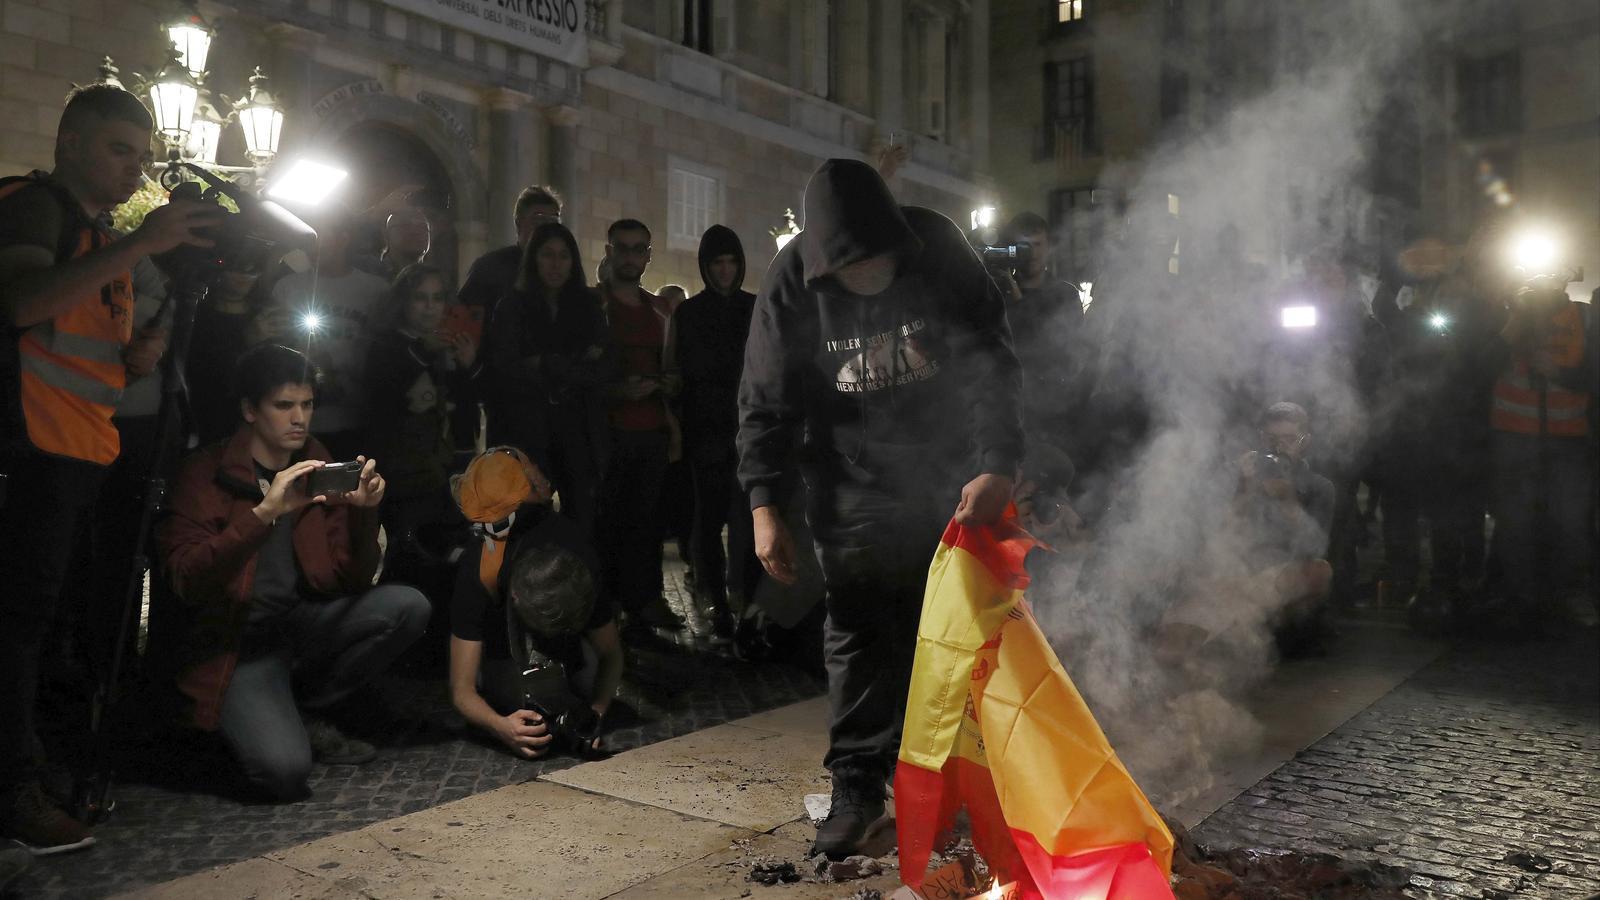 Un manifestant crema una bandera espanyola en una protesta a la plaça Sant Jaume de Barcelona / ANDREU DALMAU / EFE